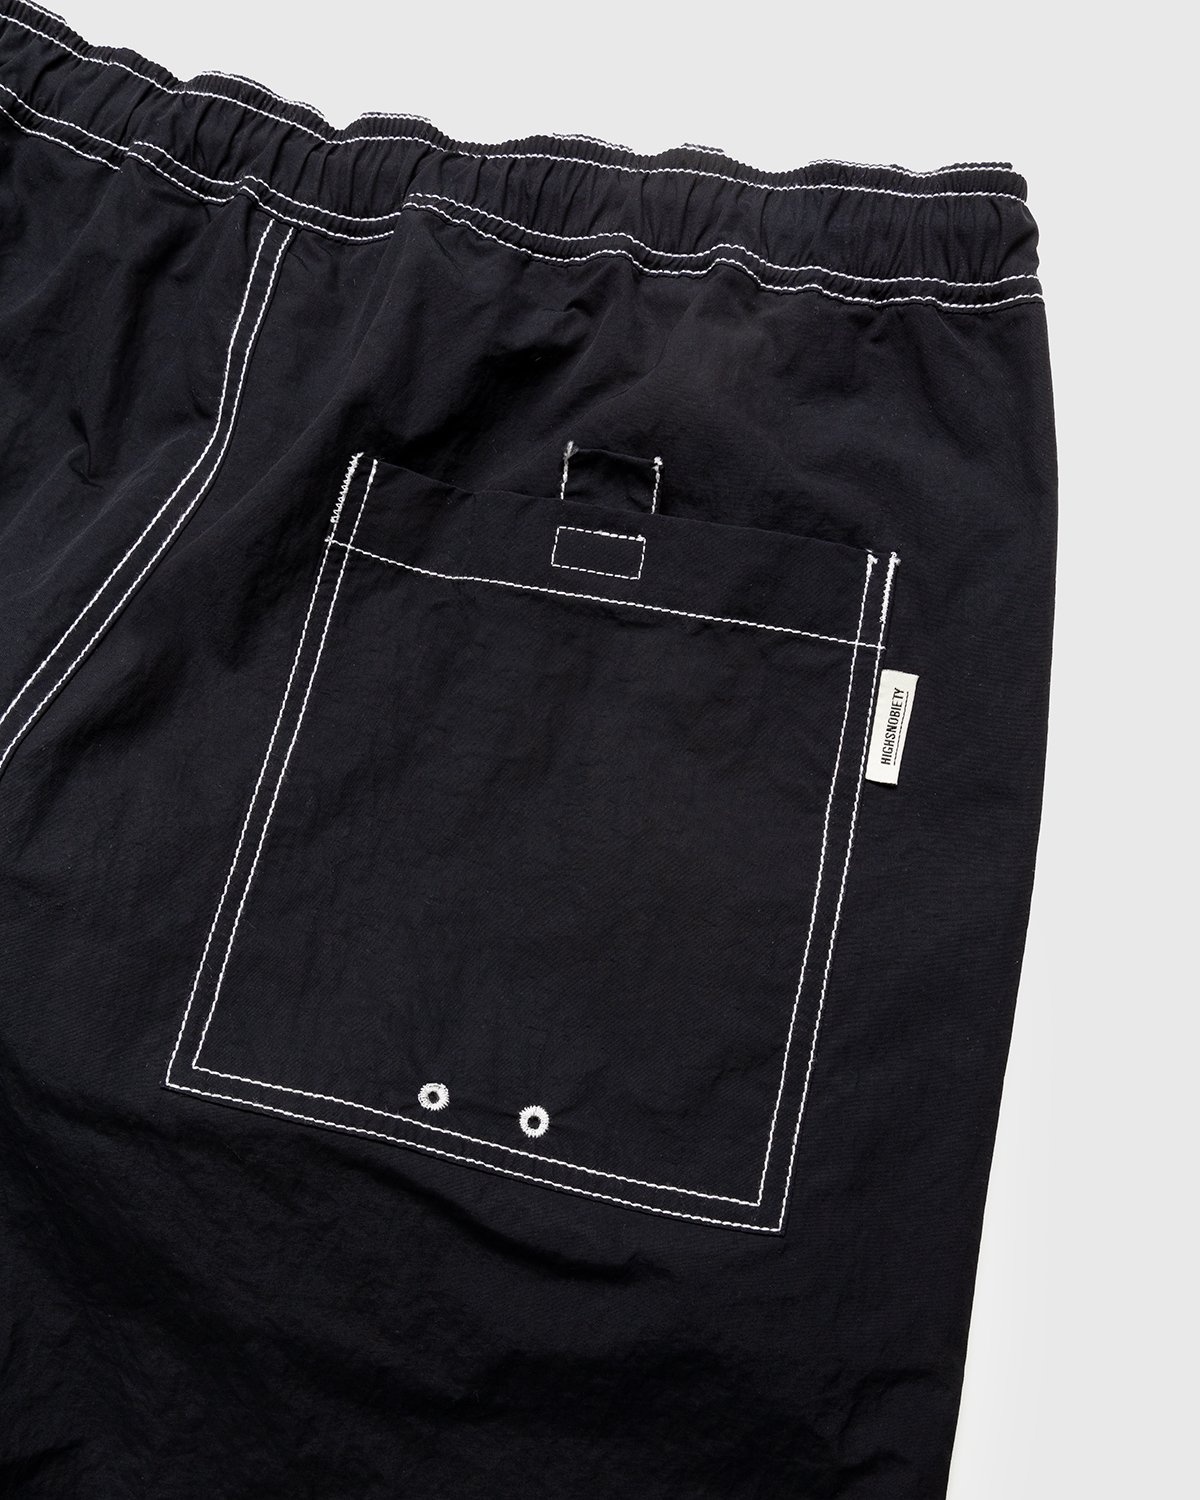 Highsnobiety – Contrast Brushed Nylon Elastic Pants Black - Active Pants - Black - Image 3